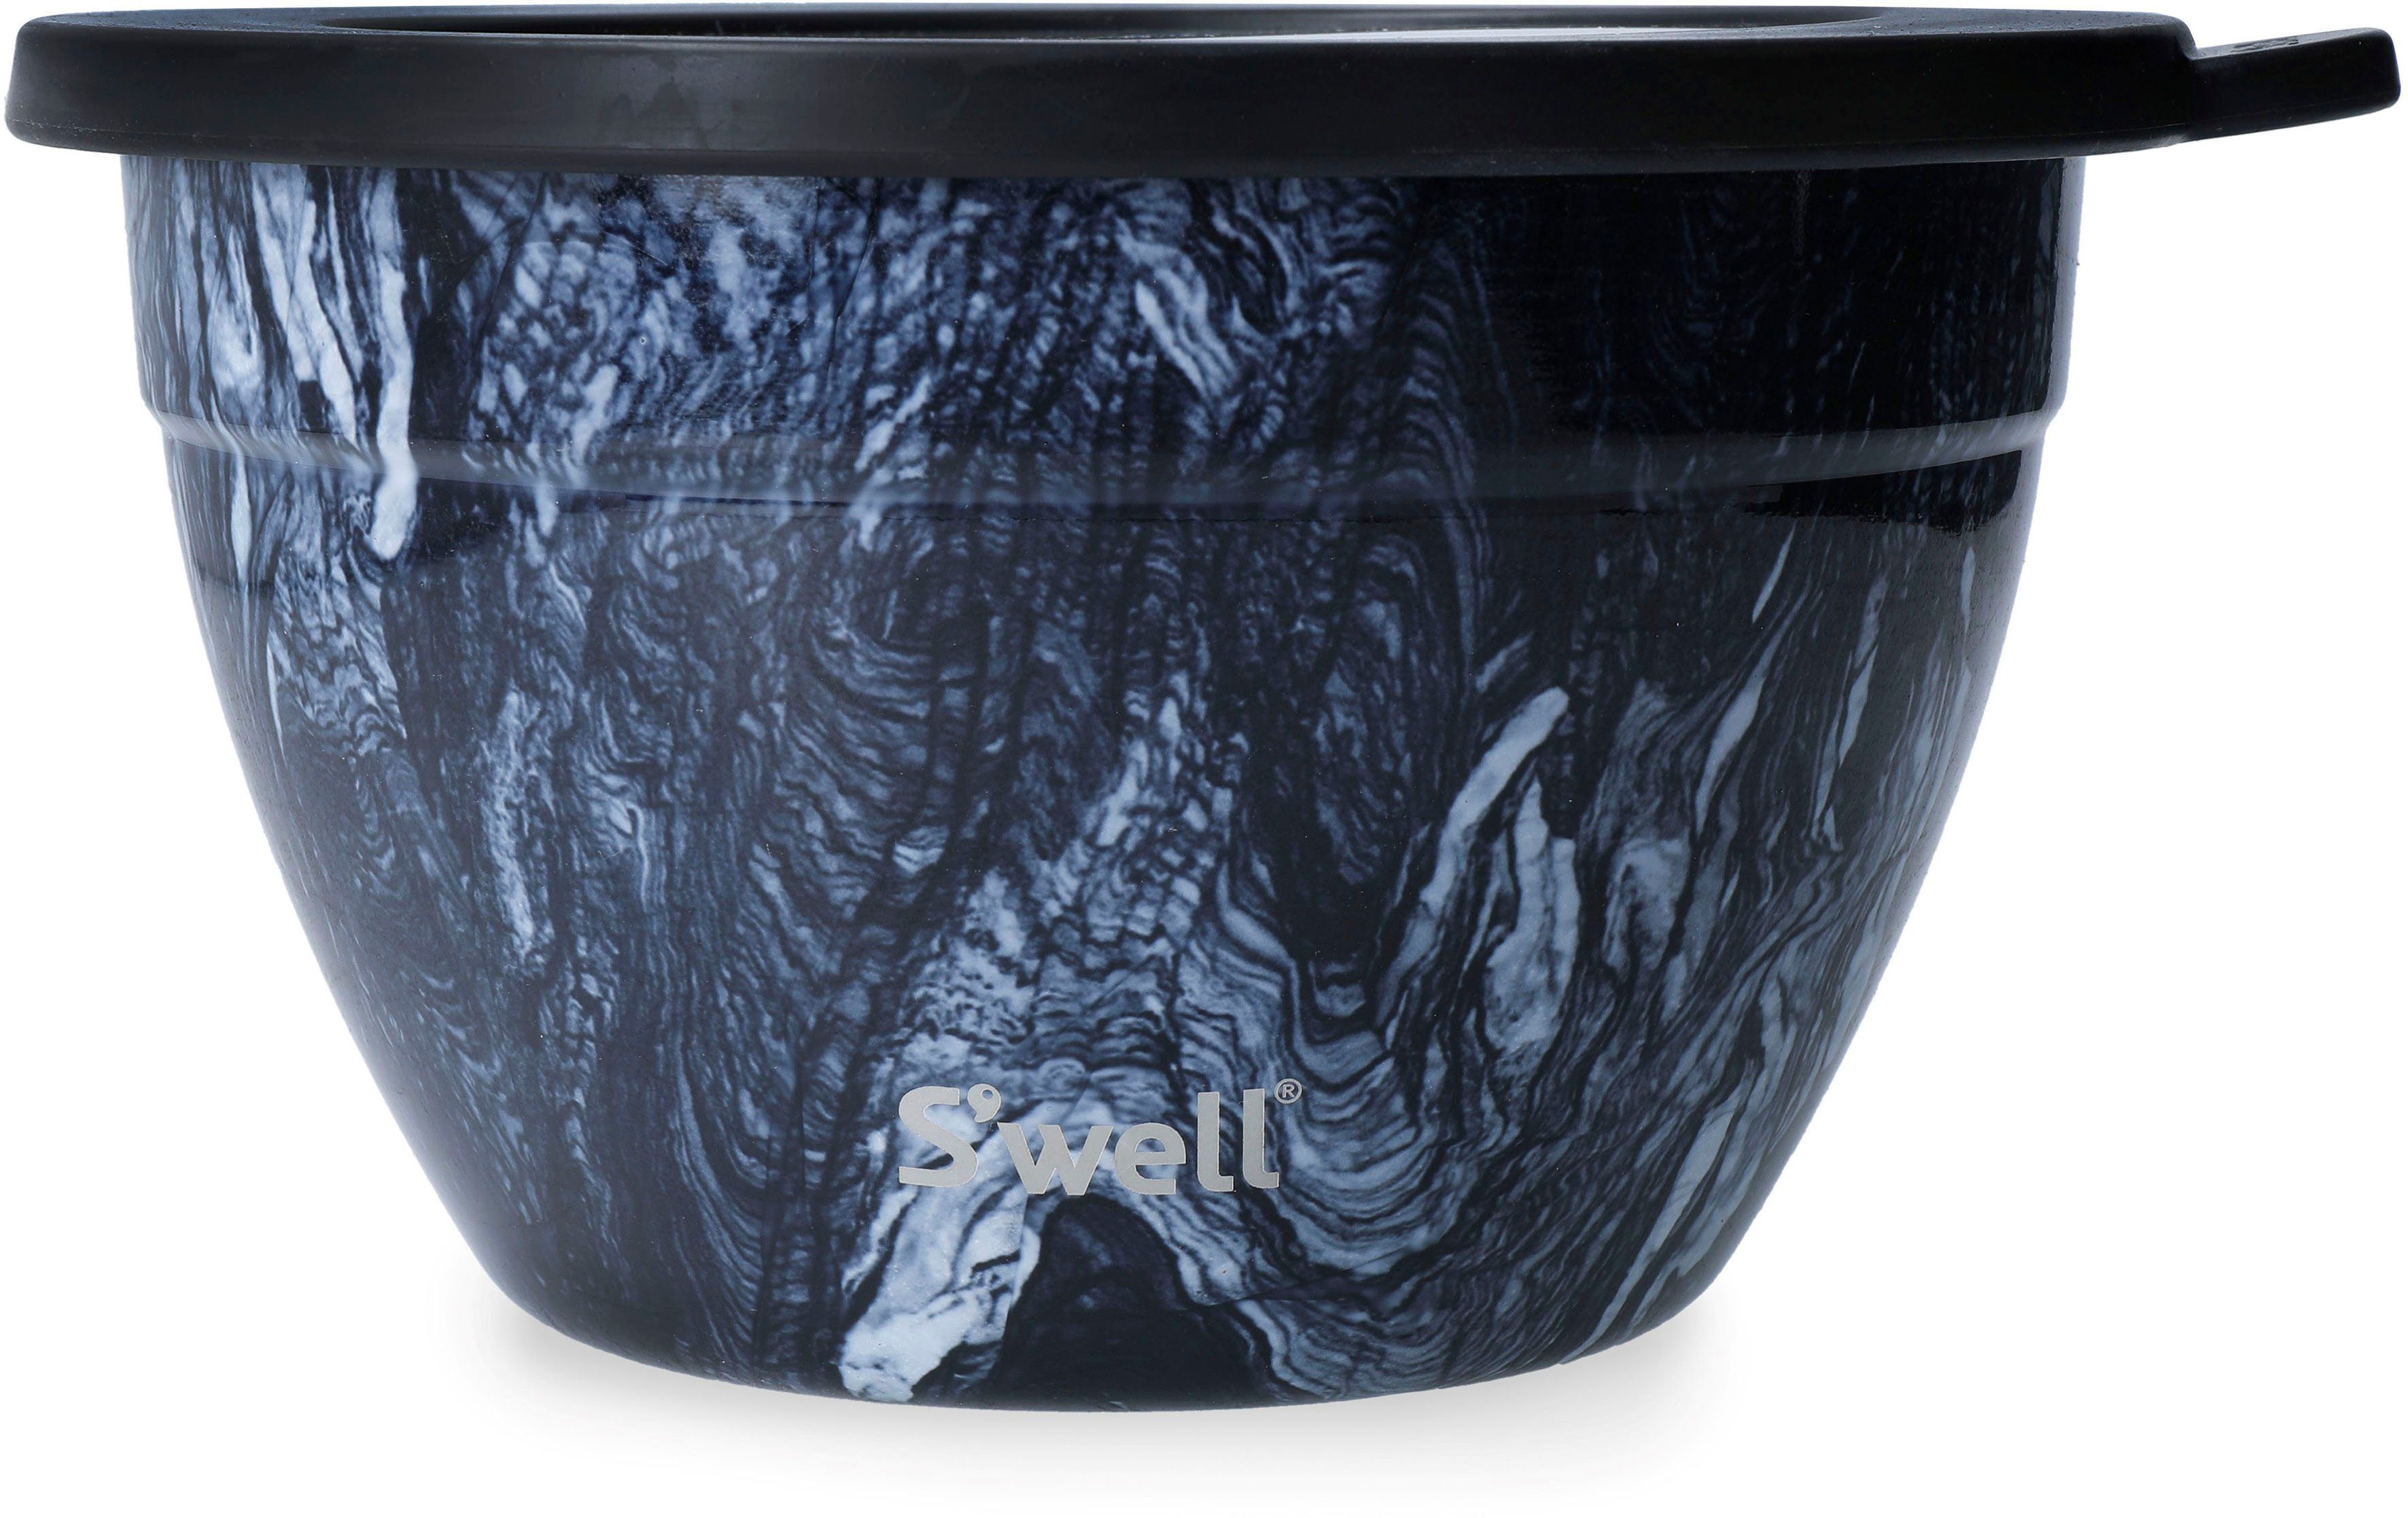 S'well Kit, Bowl Salatschüssel Therma-S'well®-Technologie, Außenschale Onyx Azurit-Marmor (3-tlg), 1.9L, S'well Edelstahl, vakuumisolierten Salad